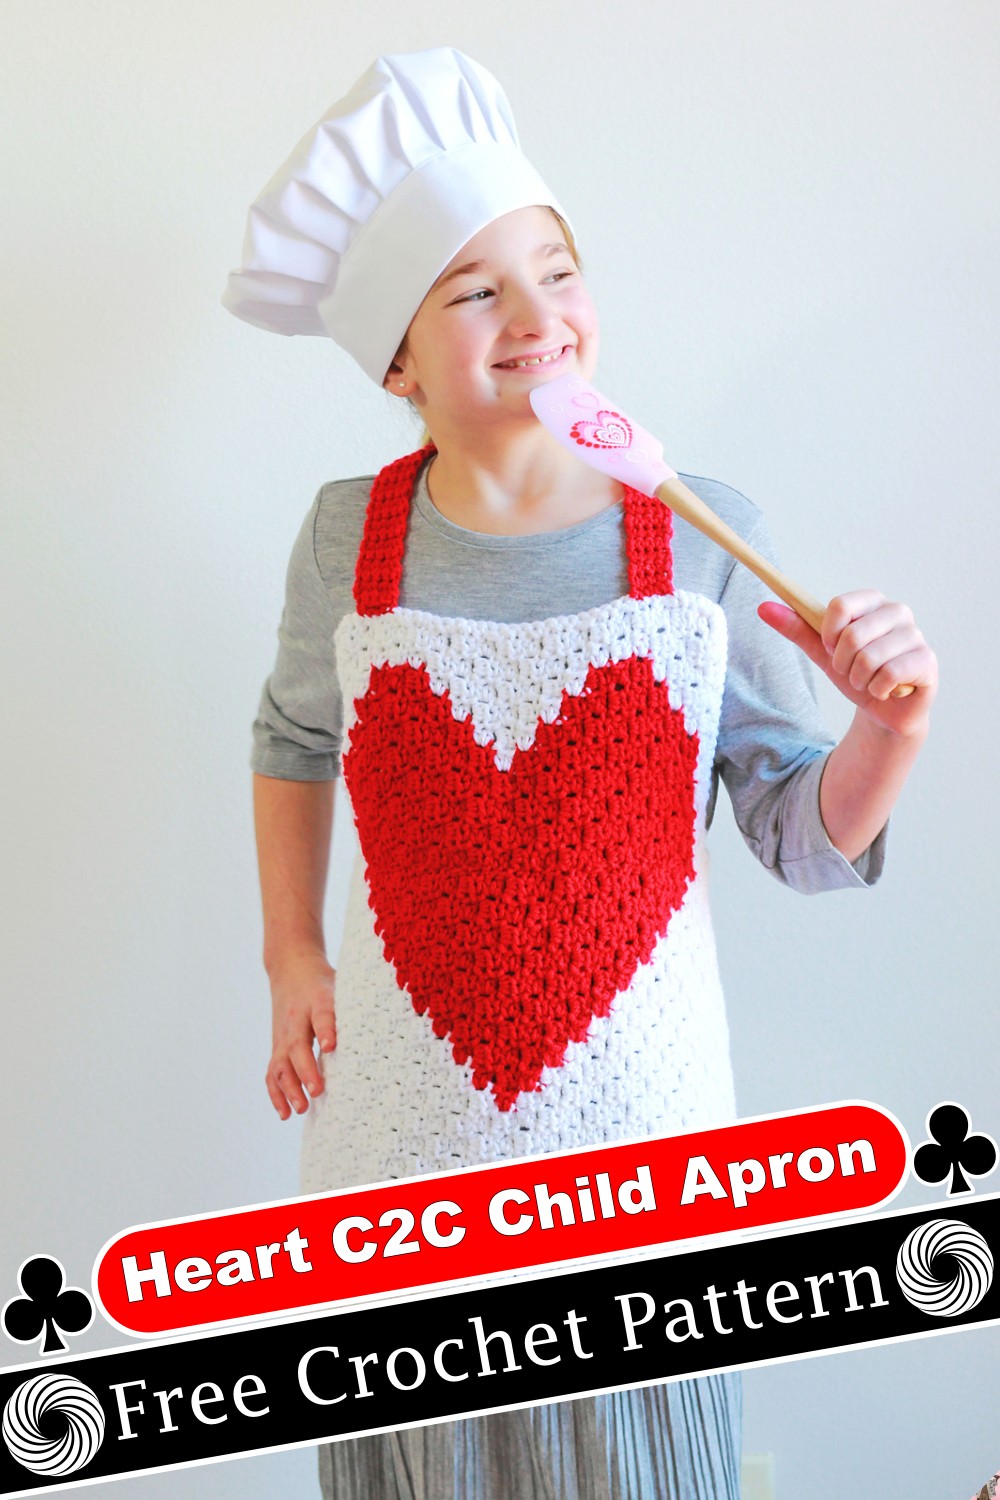 Heart C2C Child Apron